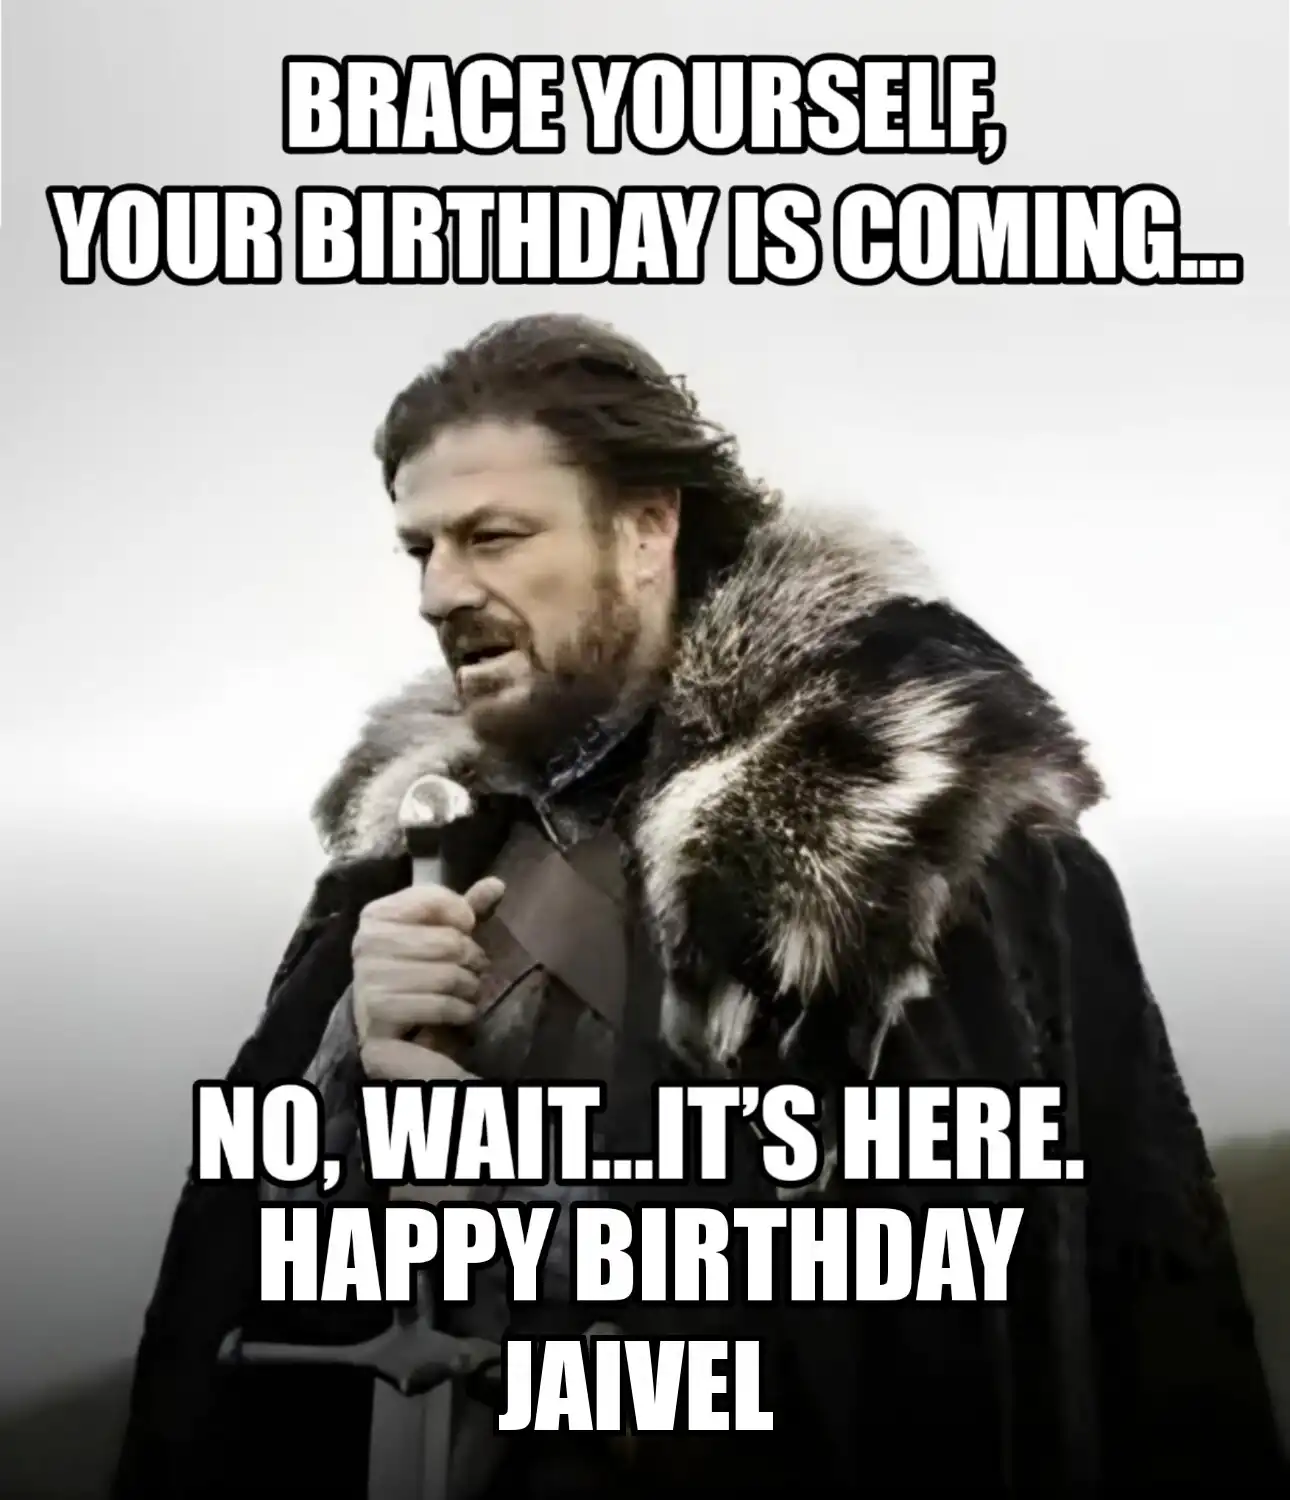 Happy Birthday Jaivel Brace Yourself Your Birthday Is Coming Meme